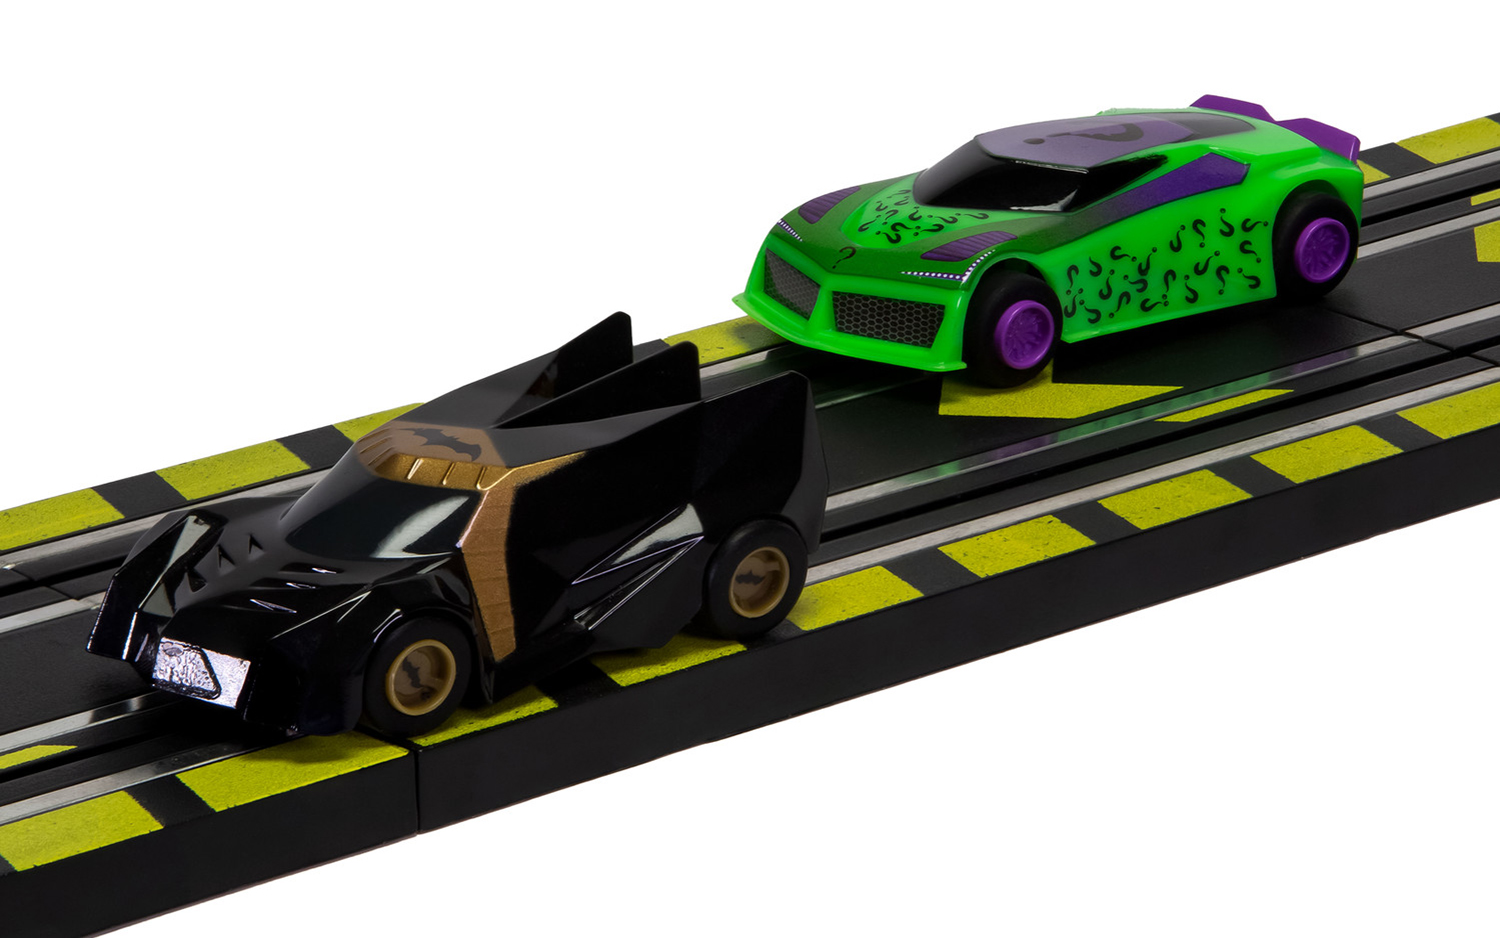 Micro Scalextric Batman vs The Riddler Set Battery Powered Race Set # 1170M